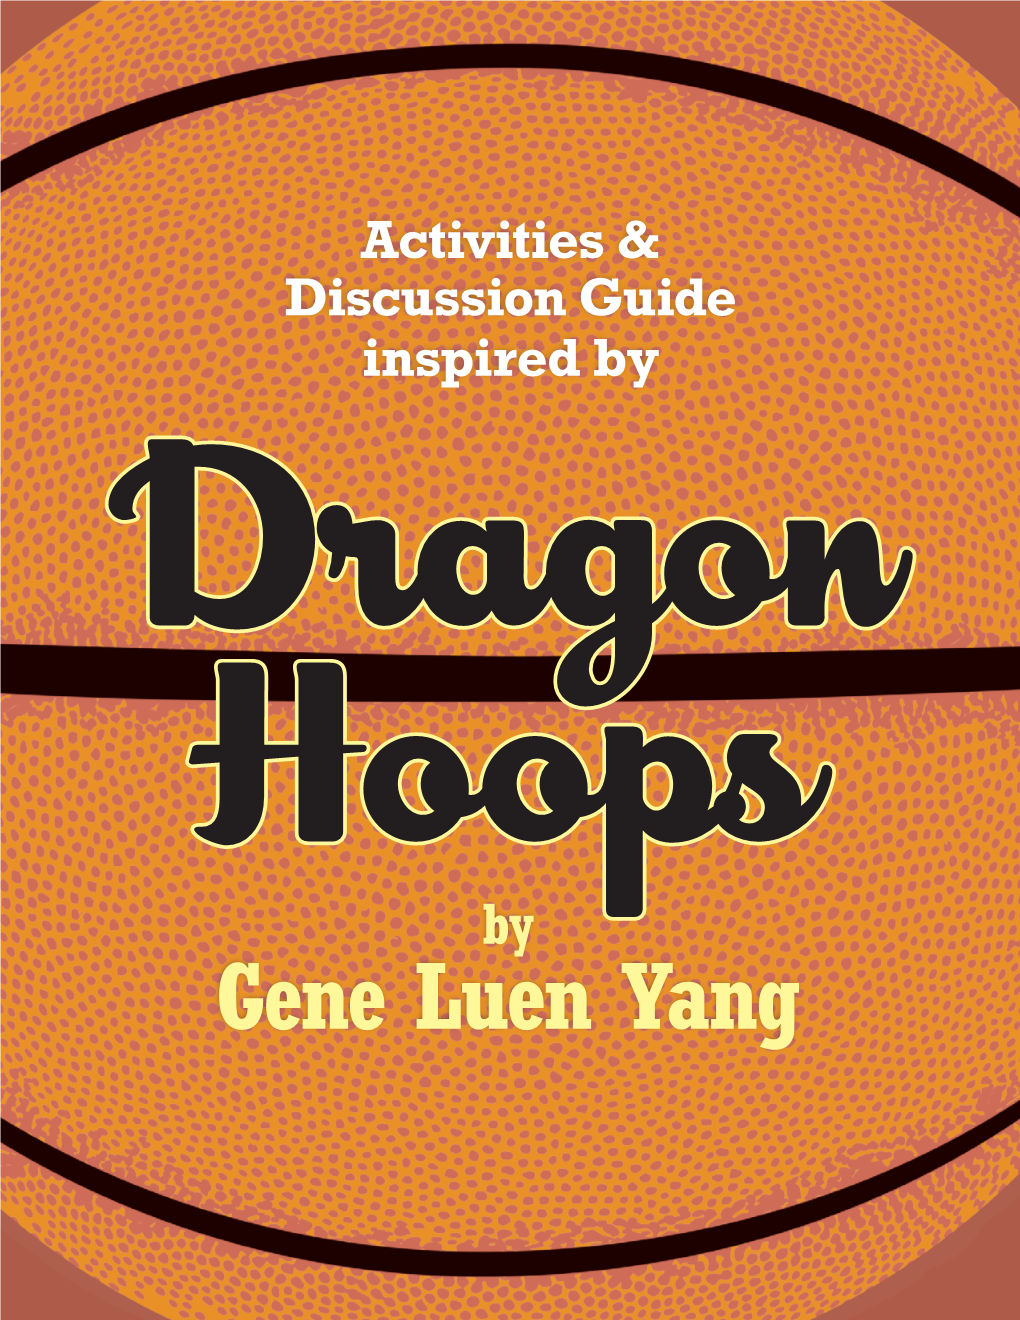 Gene Luen Yang Step Out